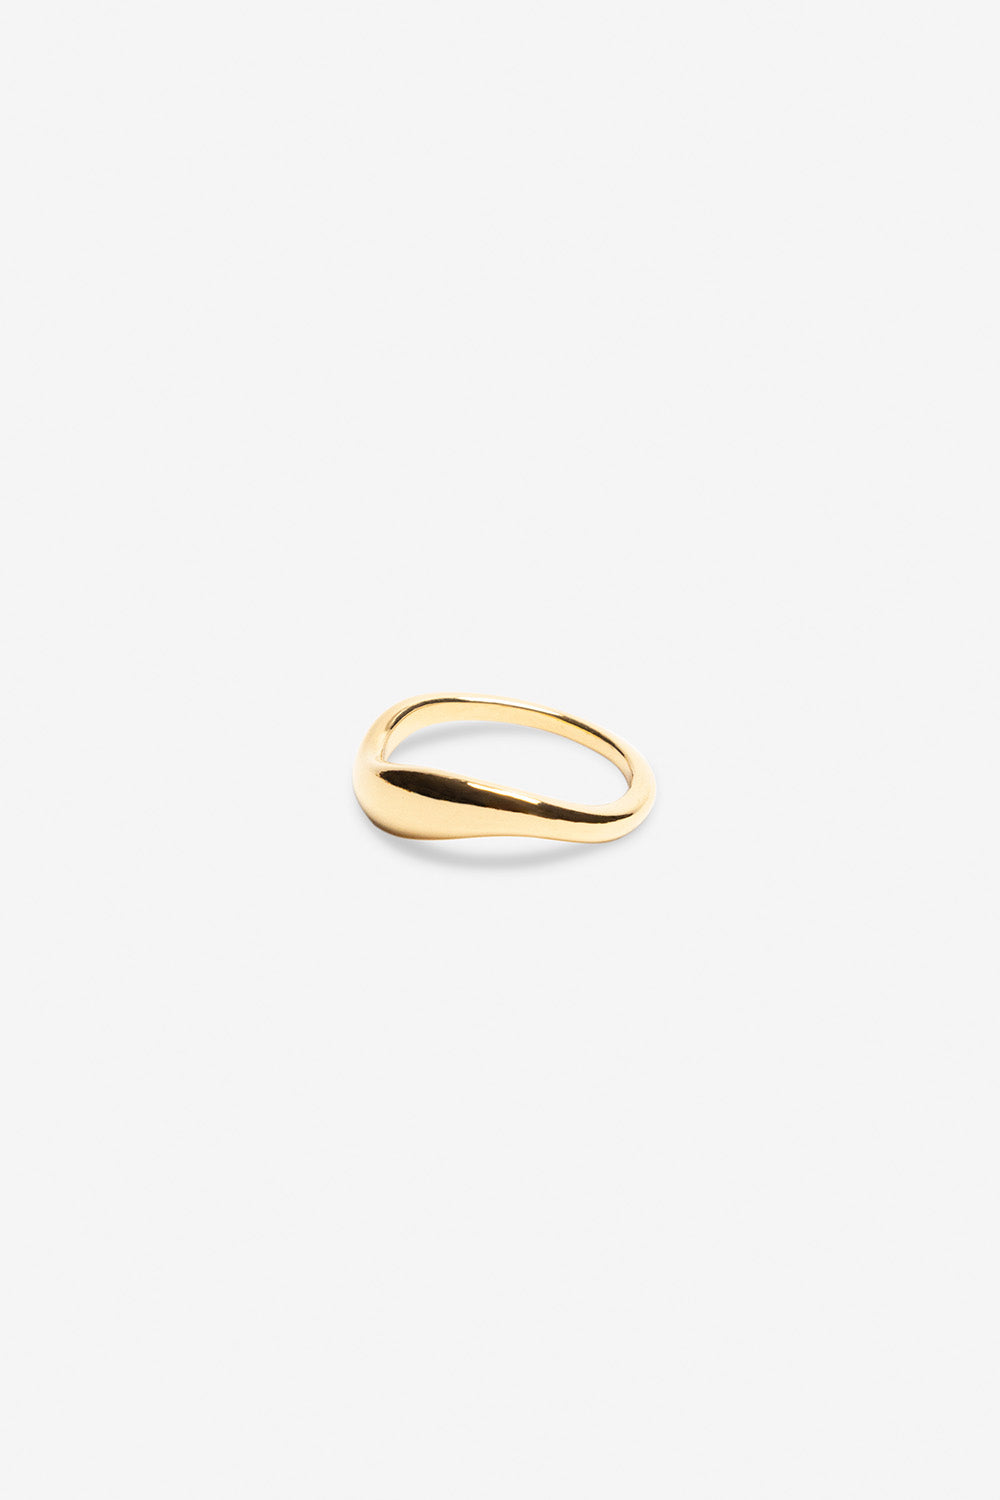 Flash Jewellery Fundamental Ring in 14k Gold Vermeil